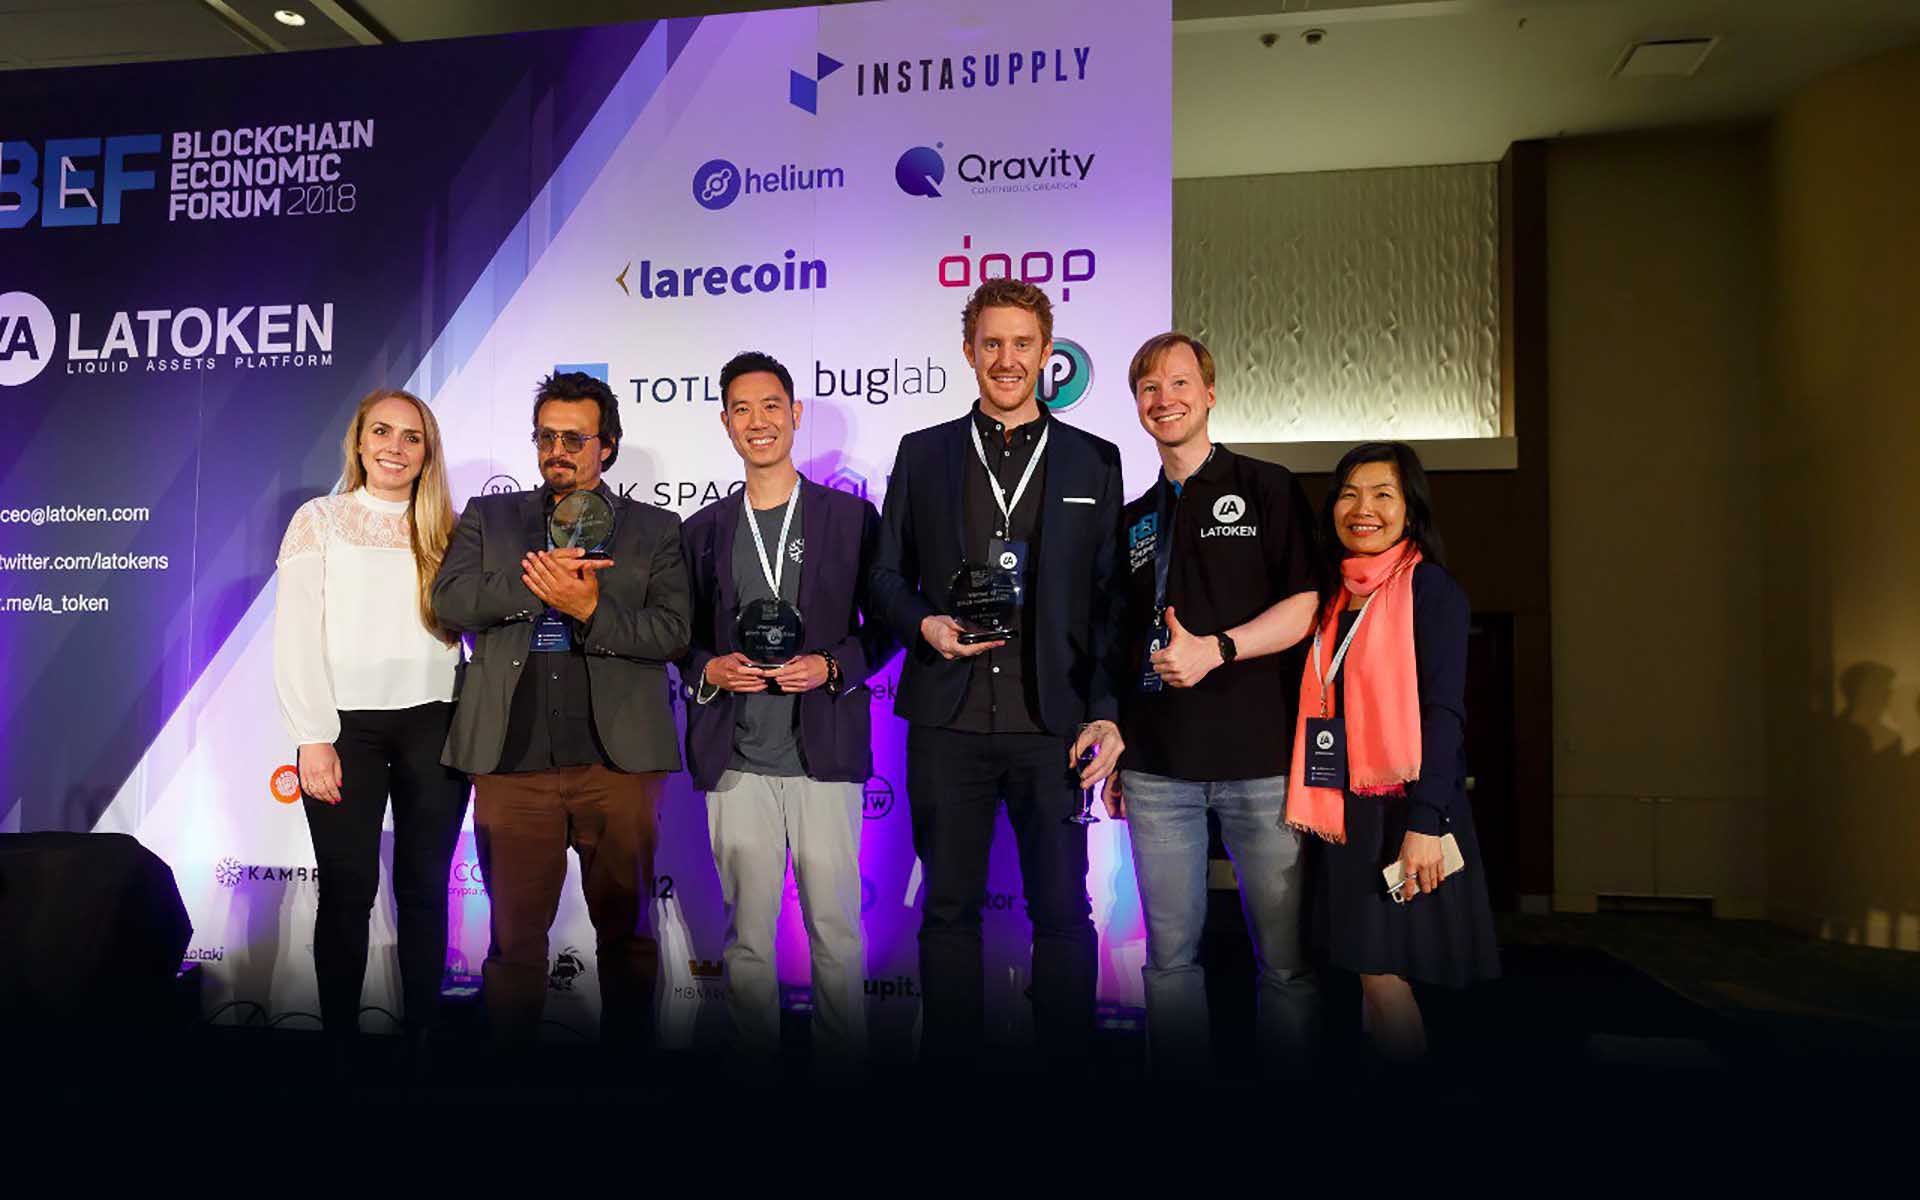 PlayChip ICO Wins ‘Draper Hero’s Choice Award’ at San Francisco Blockchain Economic Forum